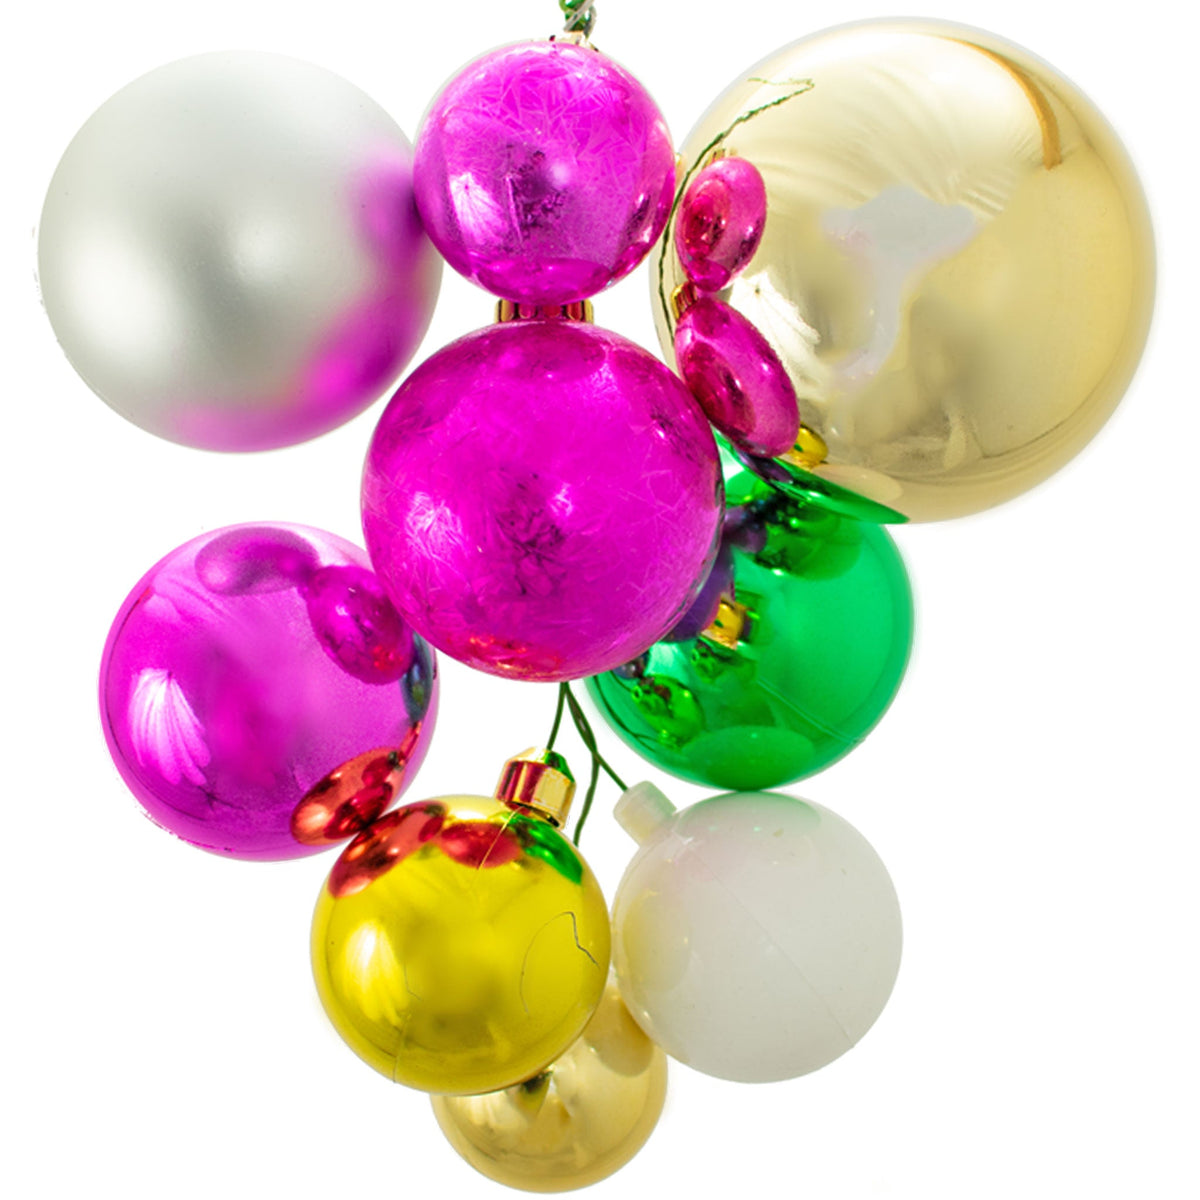 Colors include:  1 - Shiny Pink Ball Ornaments (70MM) 2 - Galvanized Pink Ball Ornaments (70MM & 50MM) 1 - Matte Silver Ball Ornament (80MM) 3 - Shiny Gold Ball Ornaments (100MM, 60MM, 50MM) 1 - Matte White Ball Ornament (60MM) 1 - Shiny Green Ball Ornament (70MM)